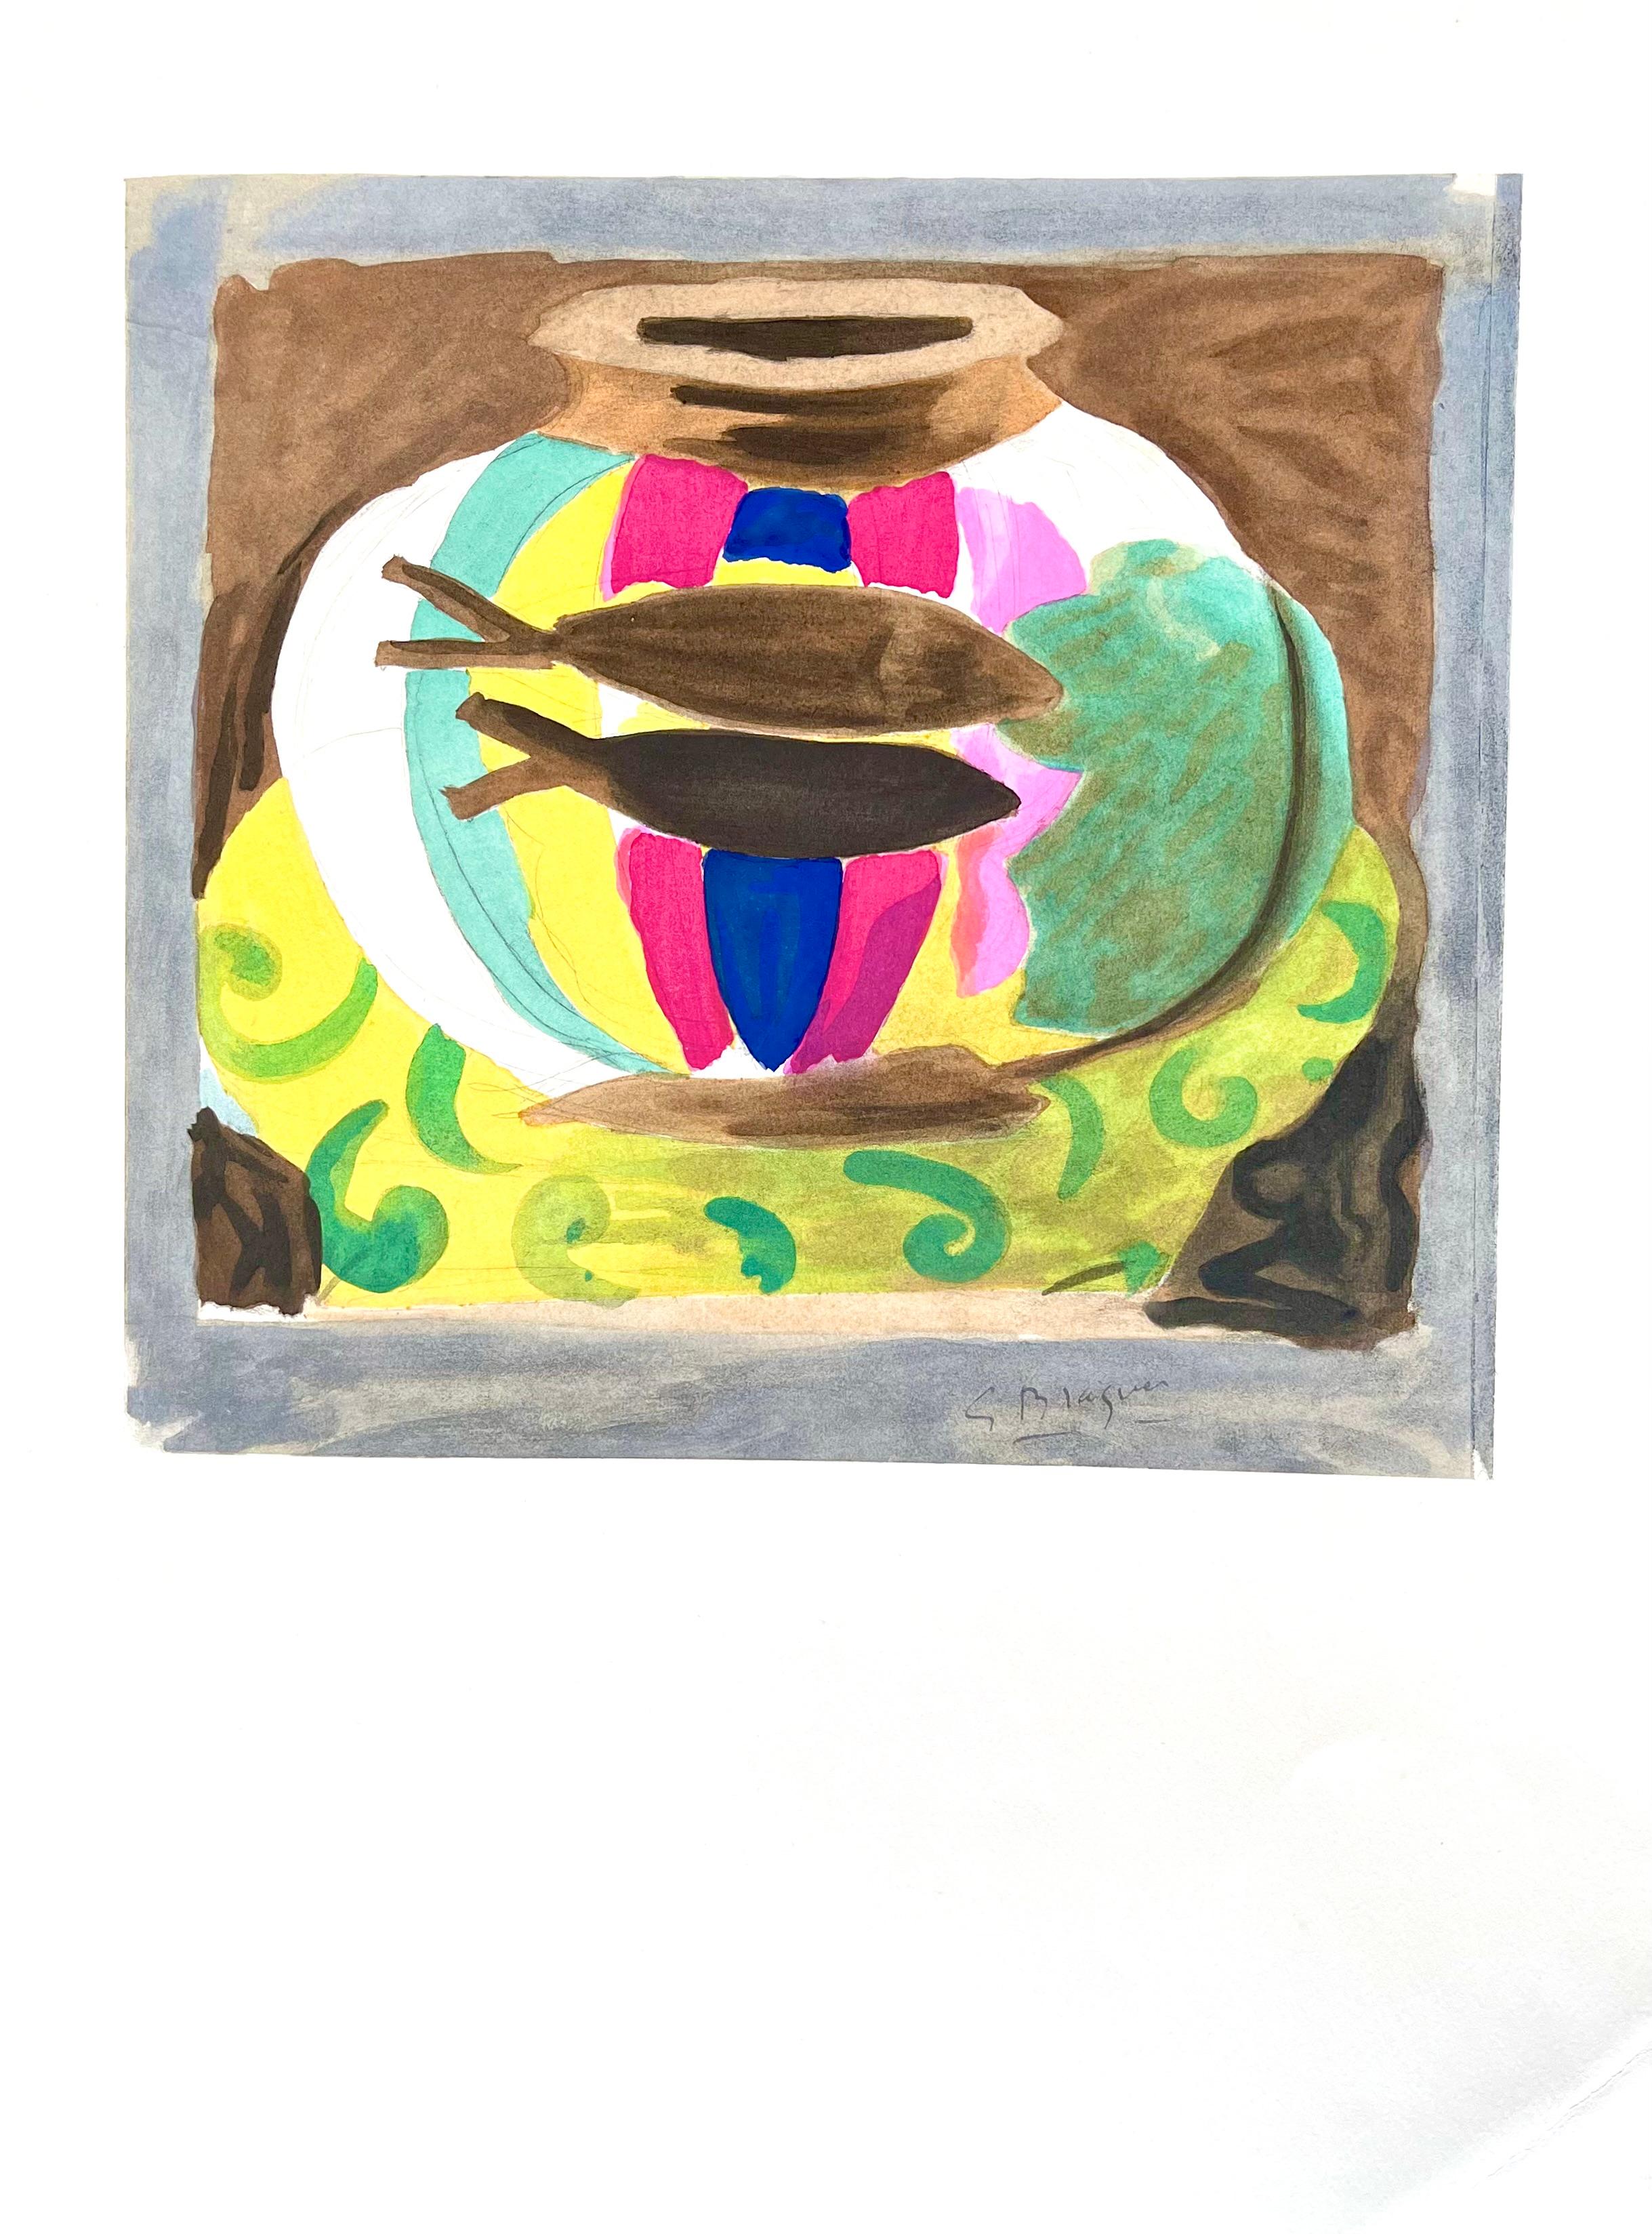 L'Aquarium multicolore, Une Aventure méthodique, Georges Braque For Sale 4